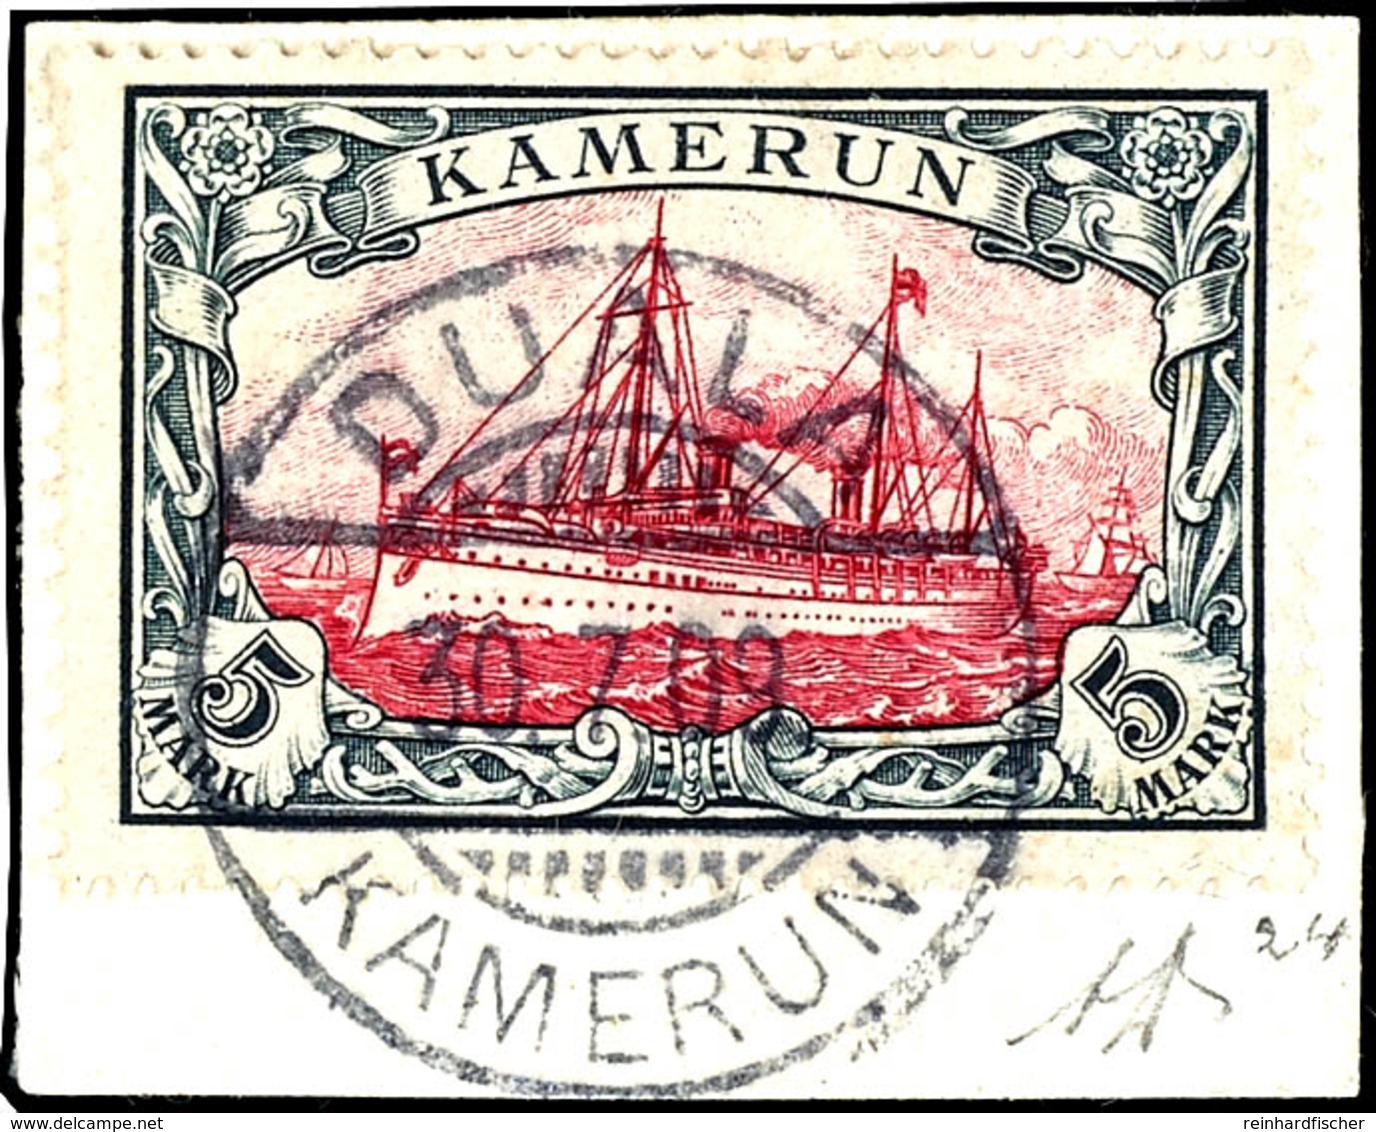 5 Mark Kaiseryacht Tadelloses Briefstück, Stempel "DUALA KAMERUN", Attest Jäschke-Lantelme BPP, Michel 600,-, Katalog: 1 - Kamerun